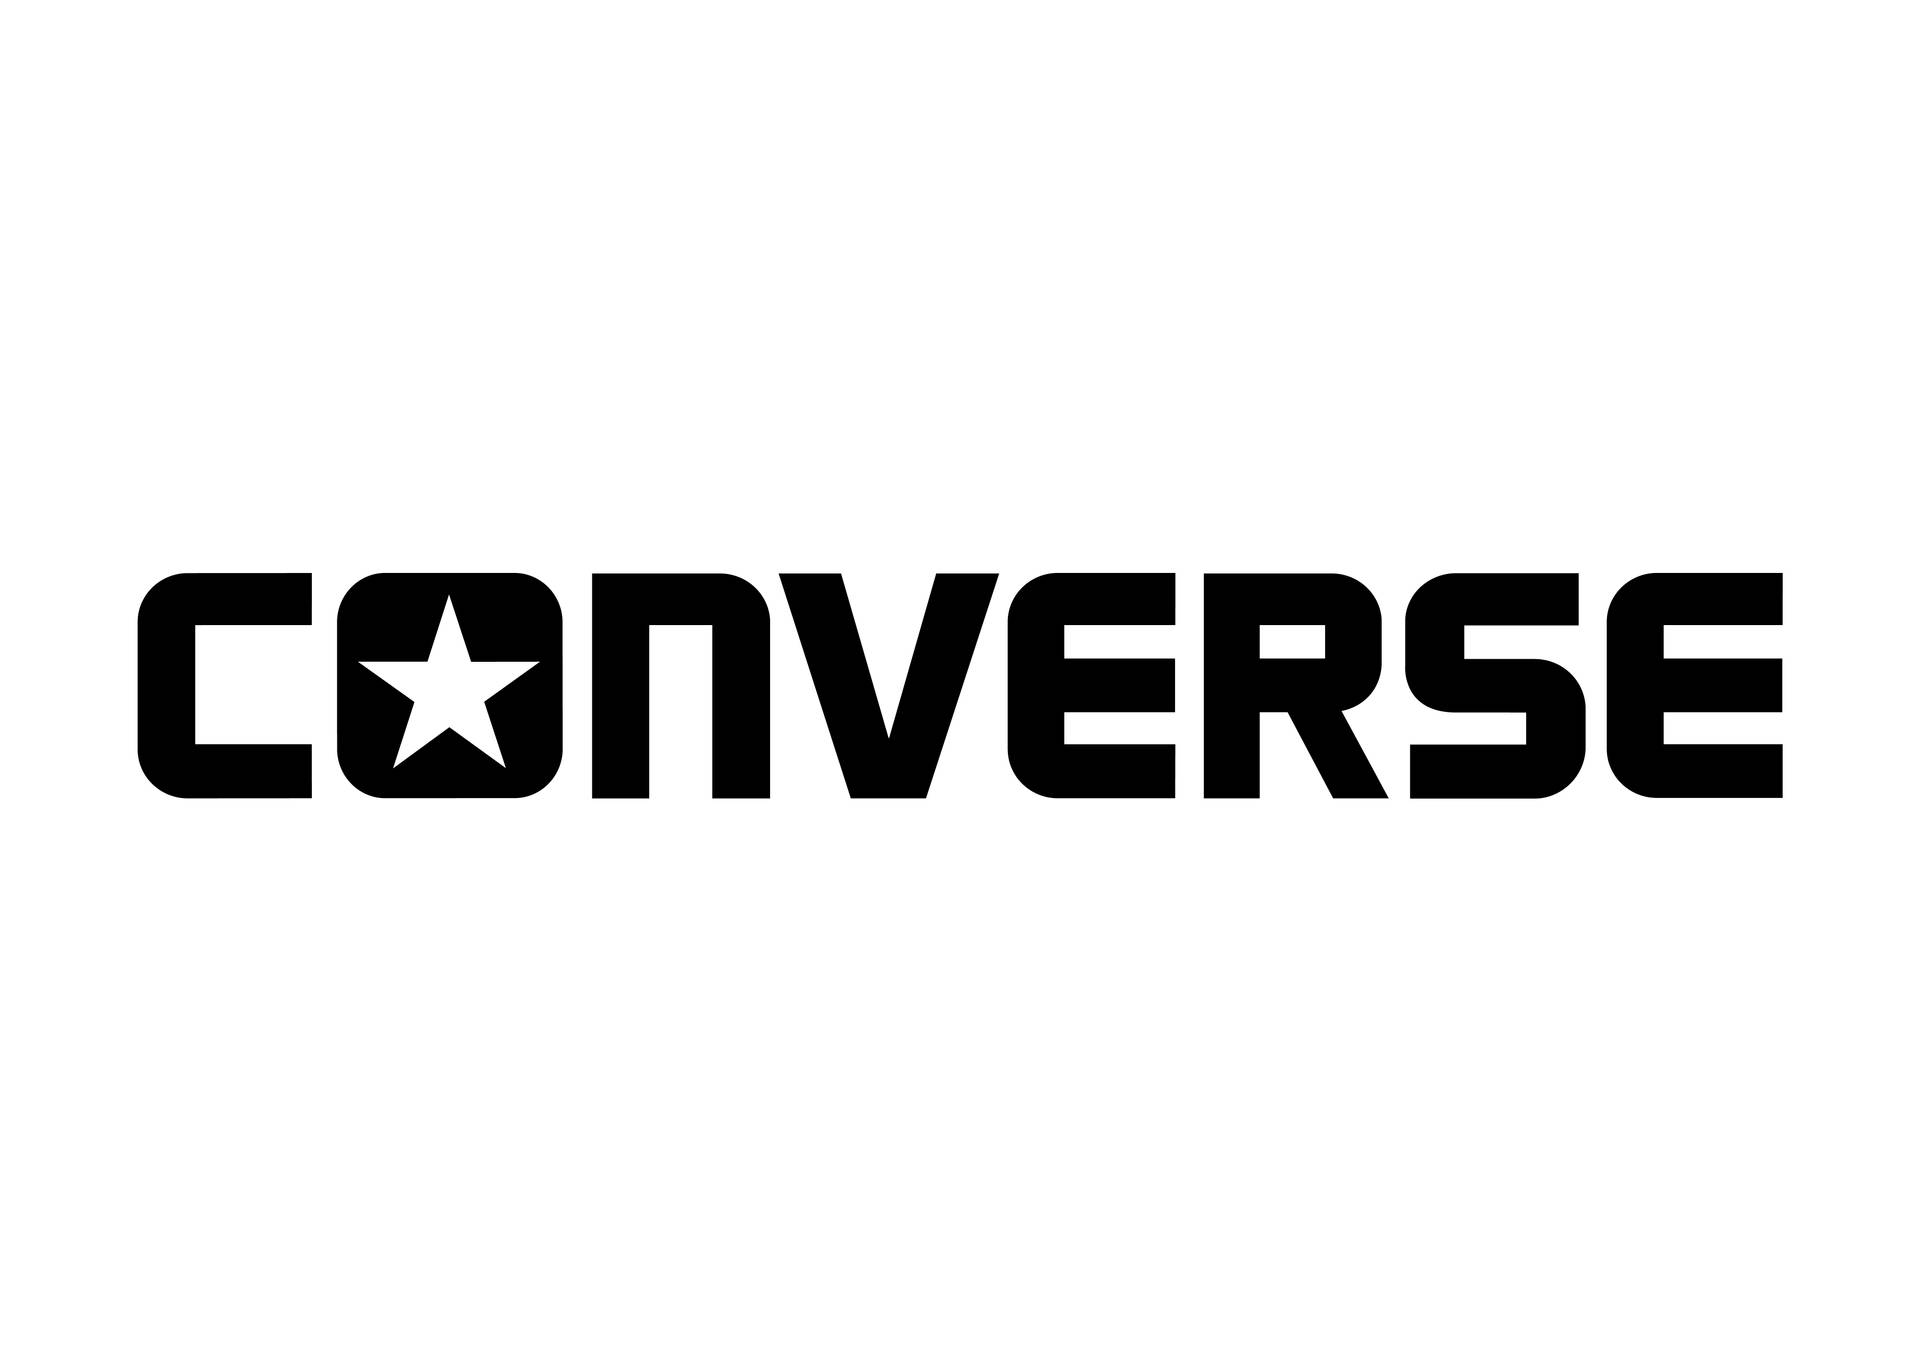 2011 Black Converse Logo Background